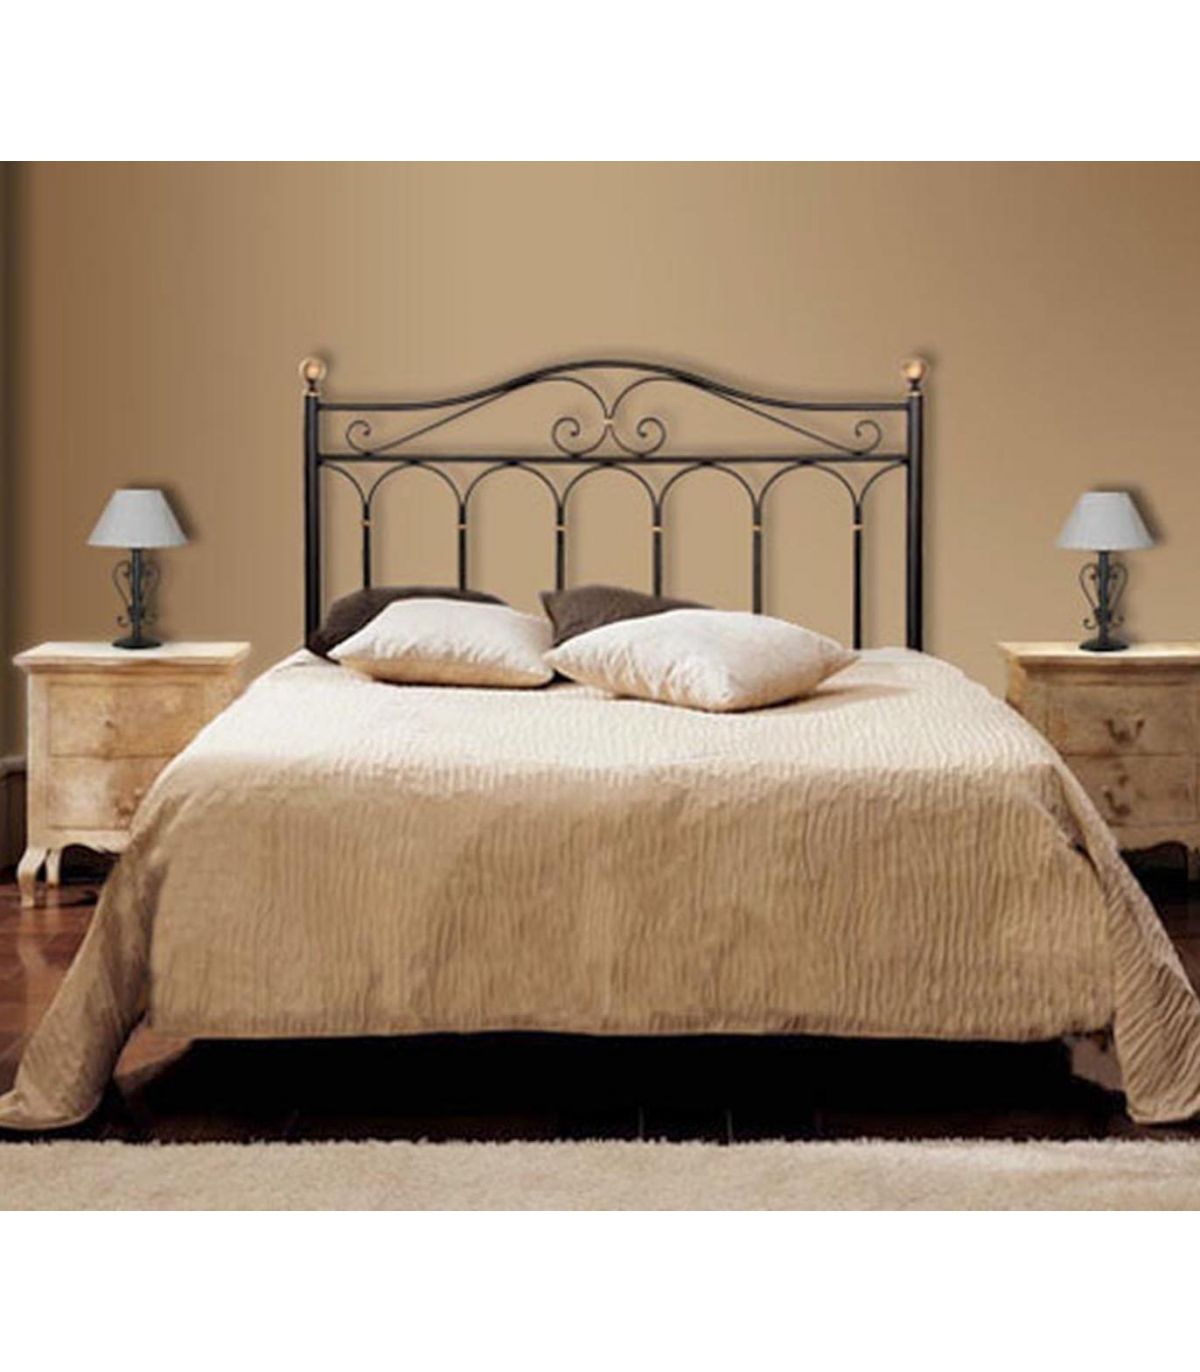 Cabecero De cama De 150 cm Cm Dormitorio Juvenil Forja Iron Color Negro -  AliExpress